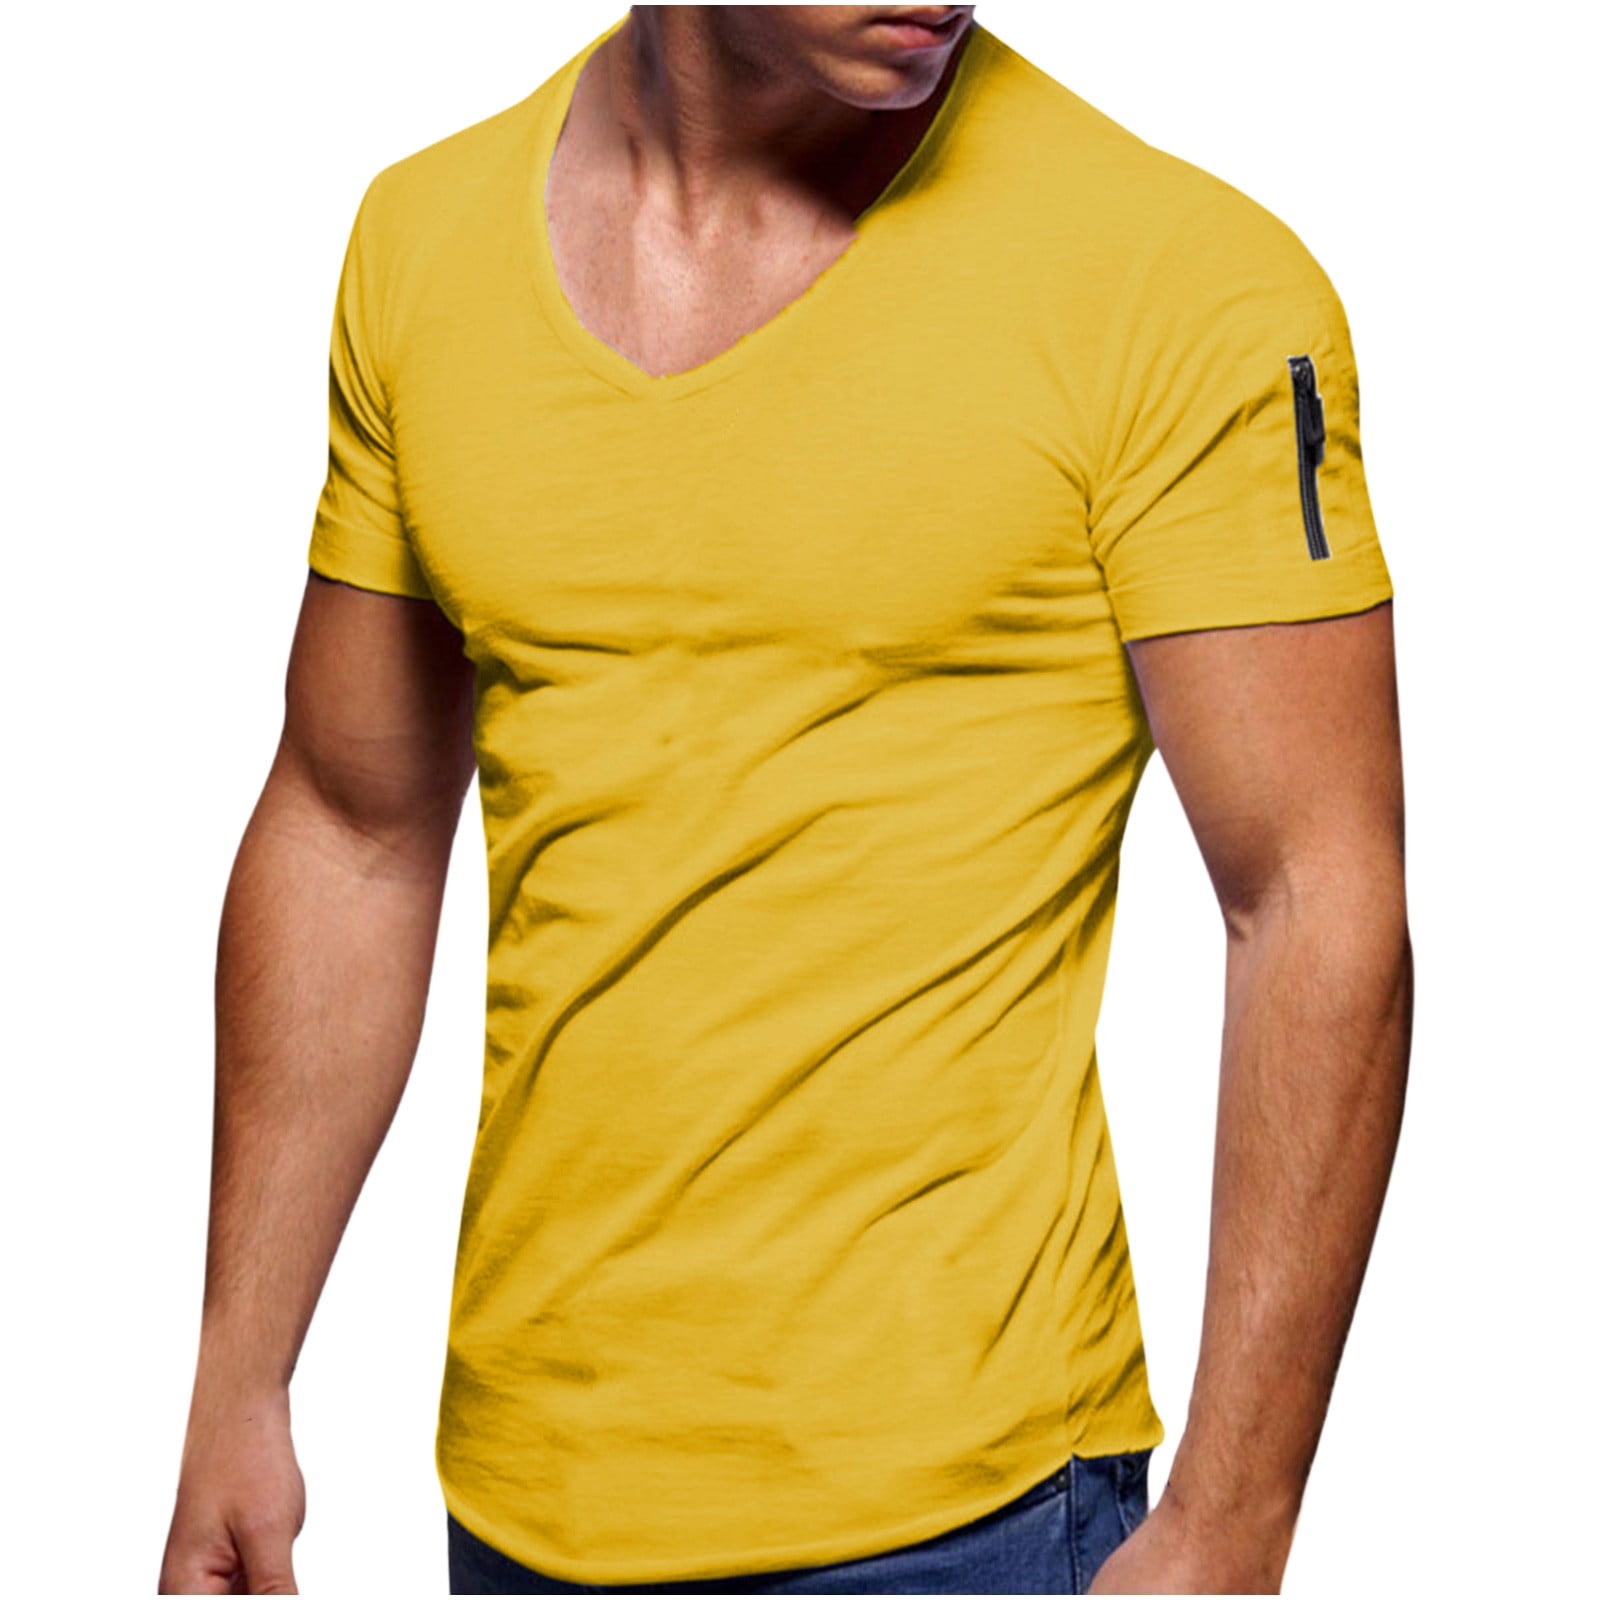  Workout Shirts for Men, V Neck Muscle Tees Short